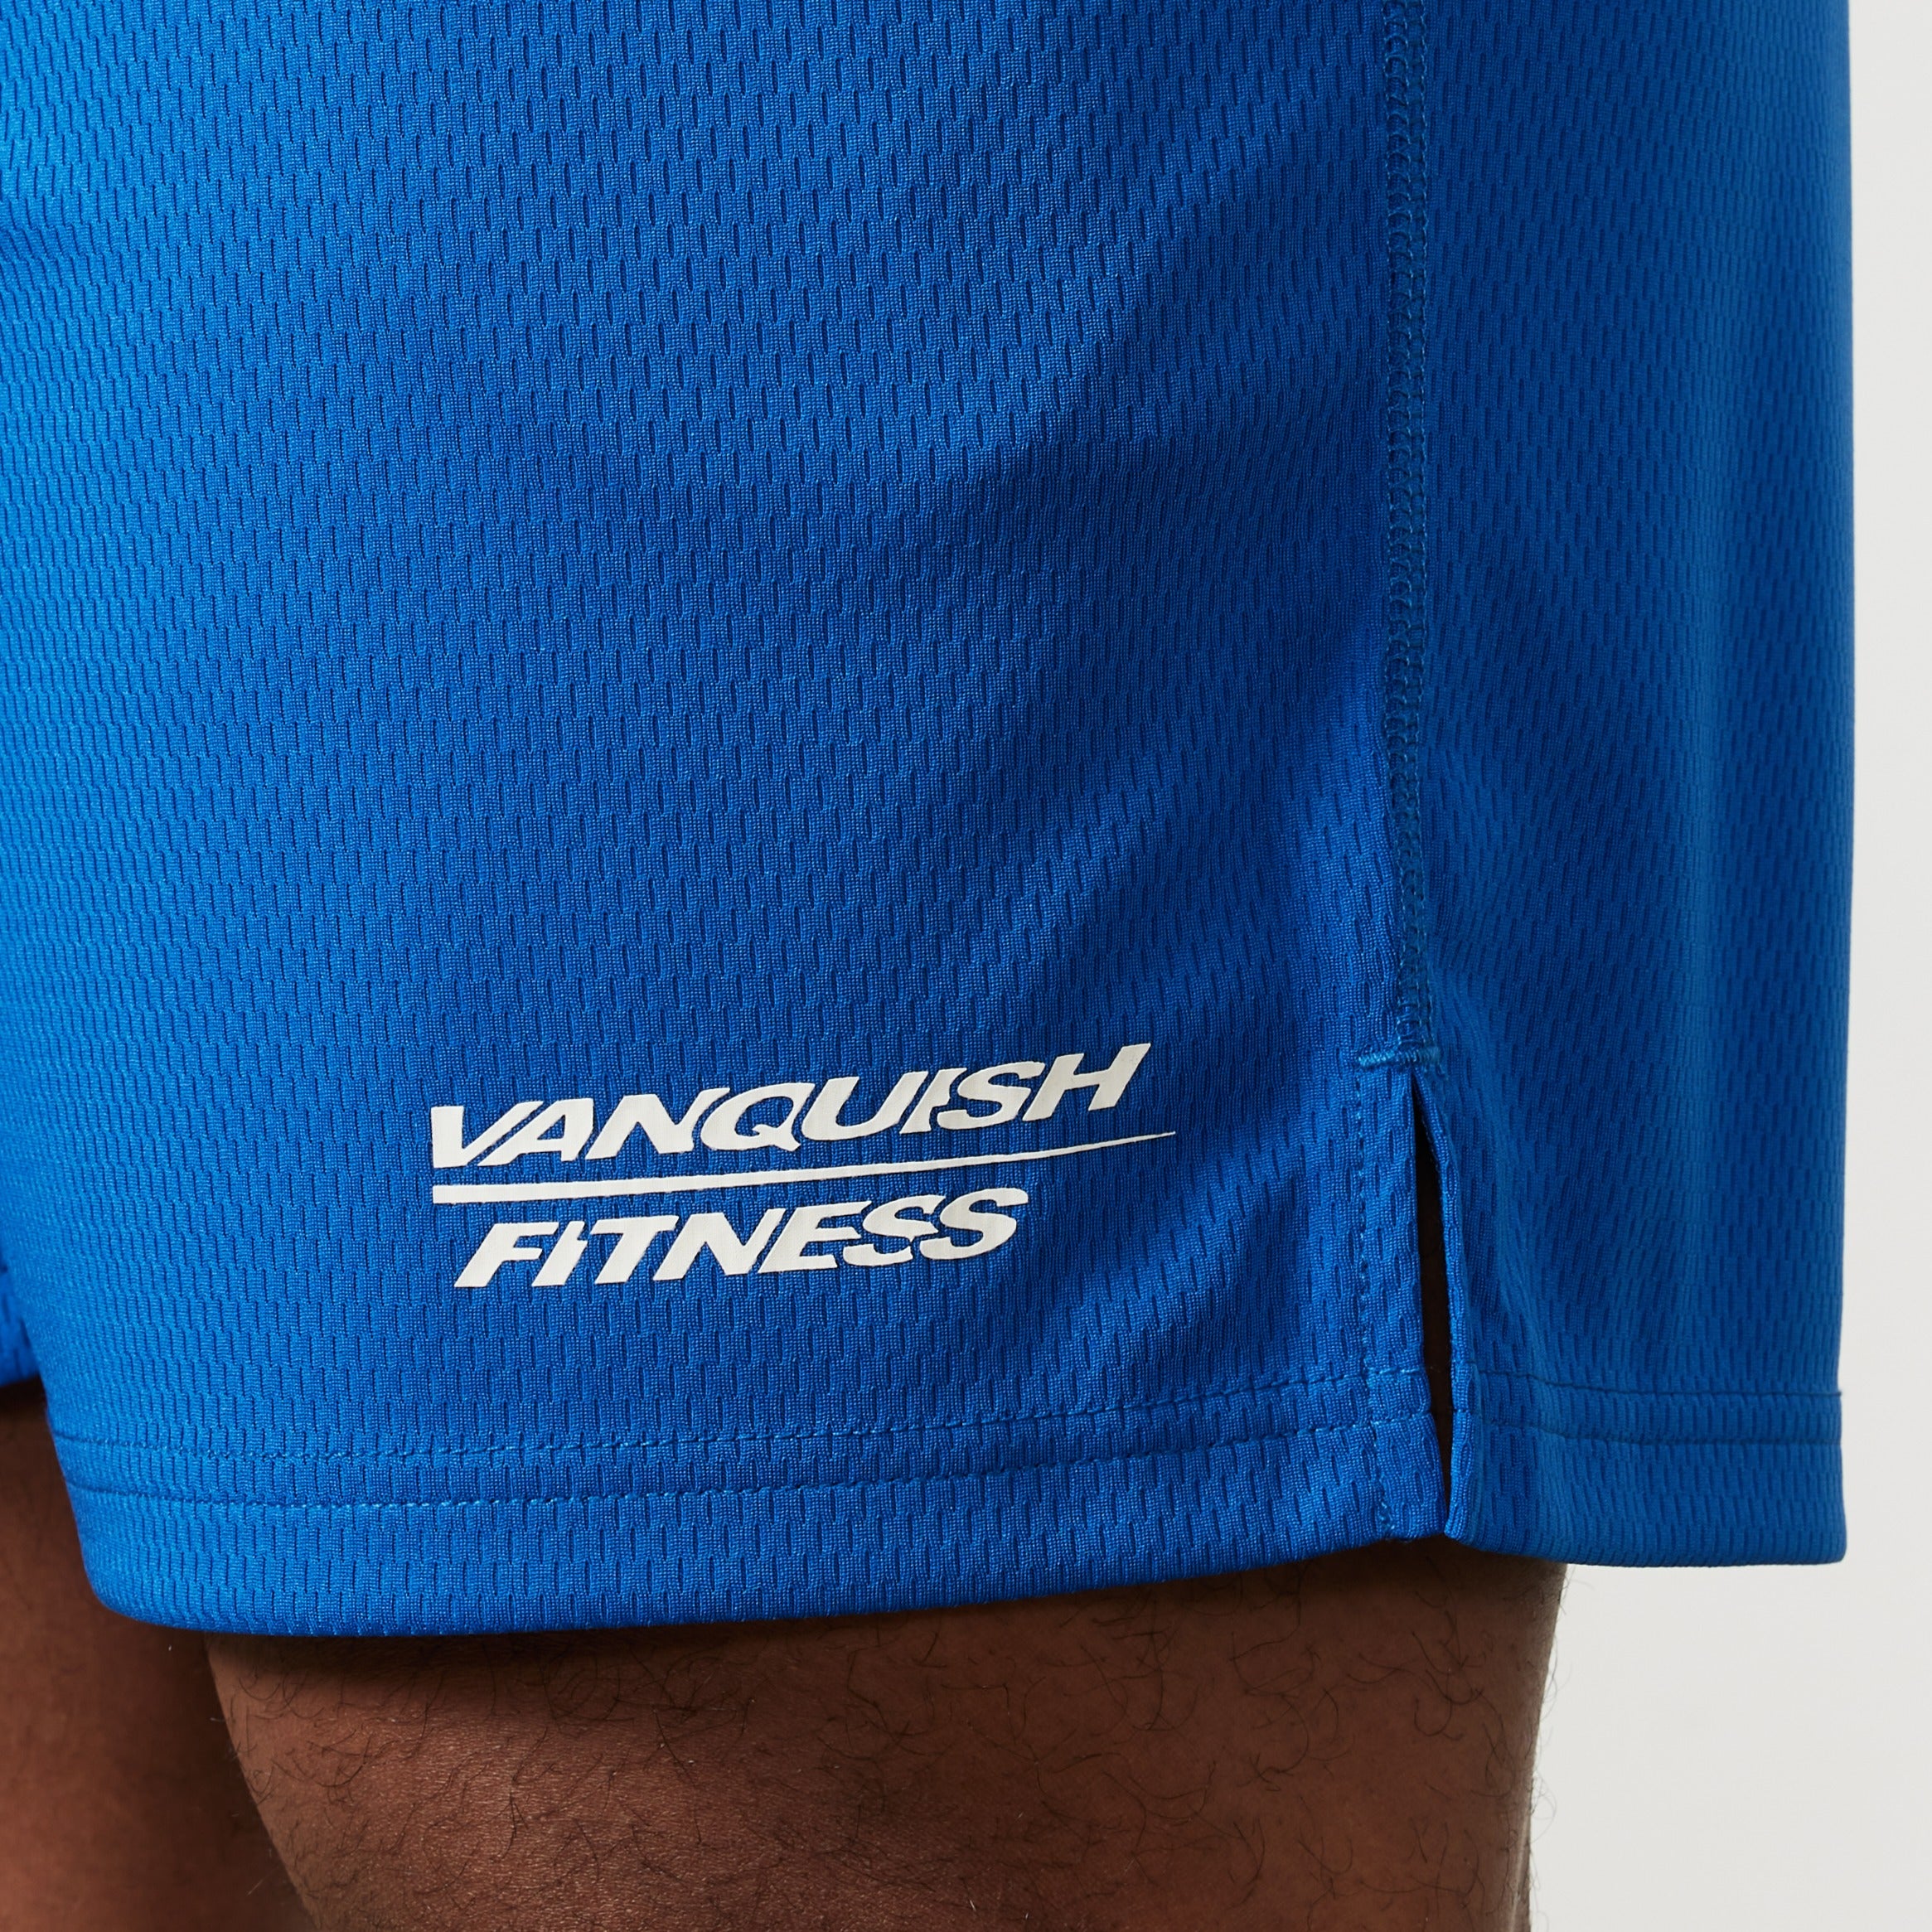 Vanquish Speed Cobalt Blue Mesh Shorts